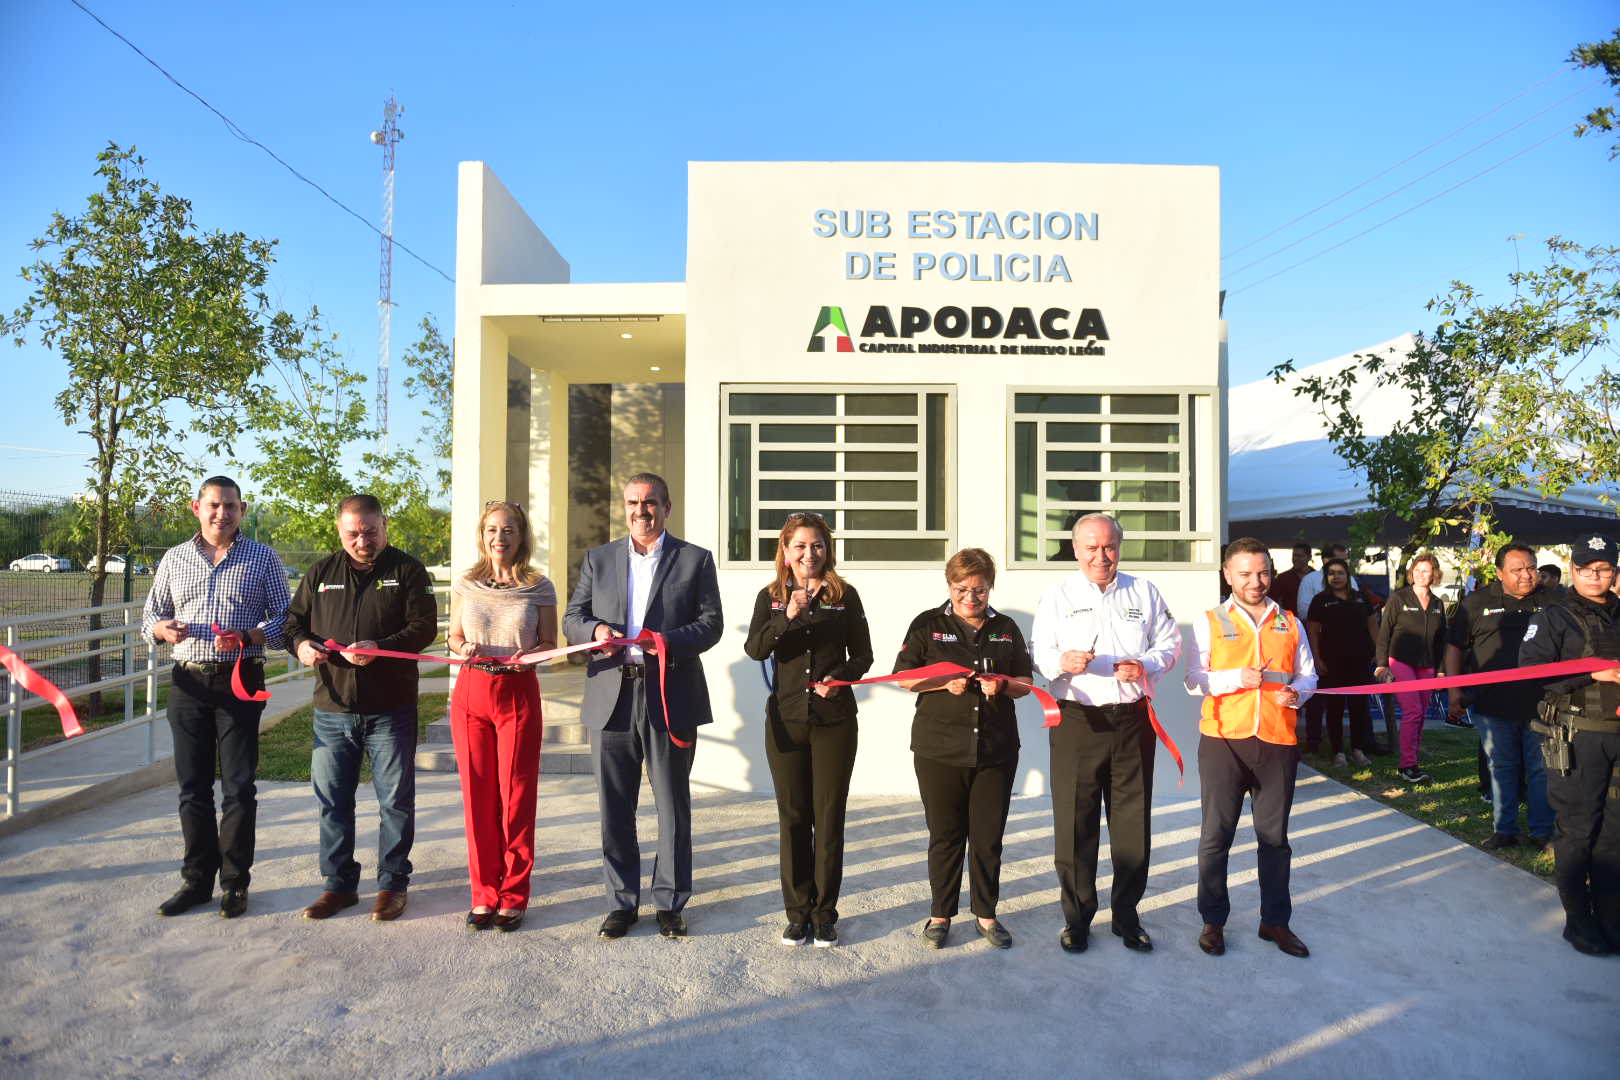 Inauguran subdelegación de policía en portal de Santa Rosa, Apodaca